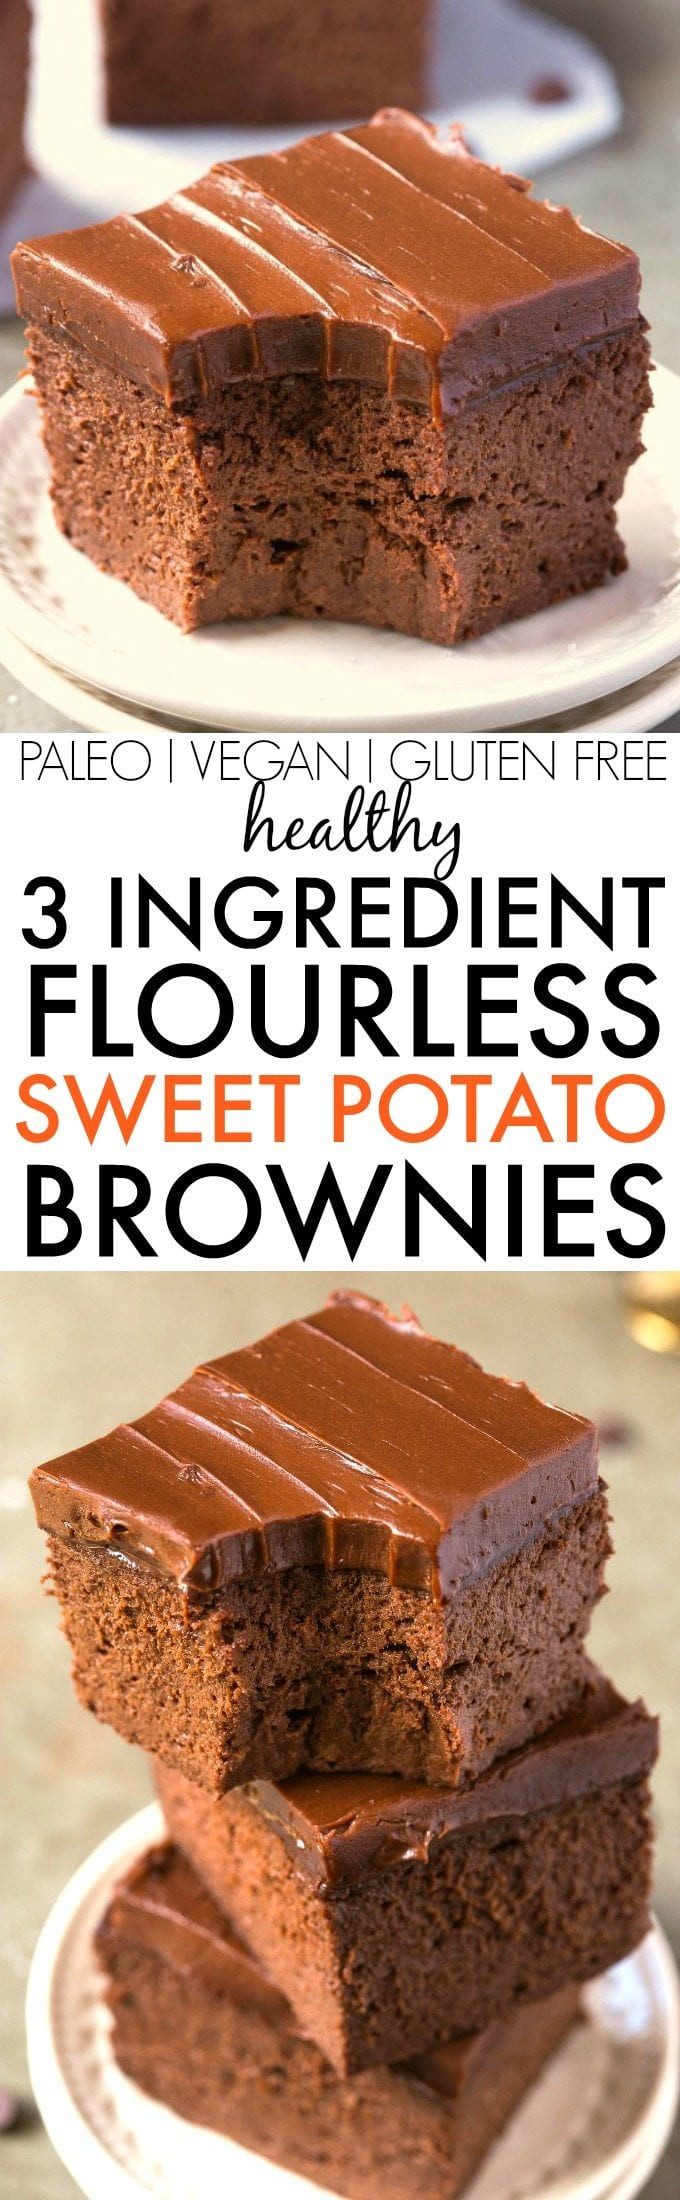 Sweet Potato Brownies Gluten Free
 Healthy 3 Ingre nt Flourless Sweet Potato Brownies